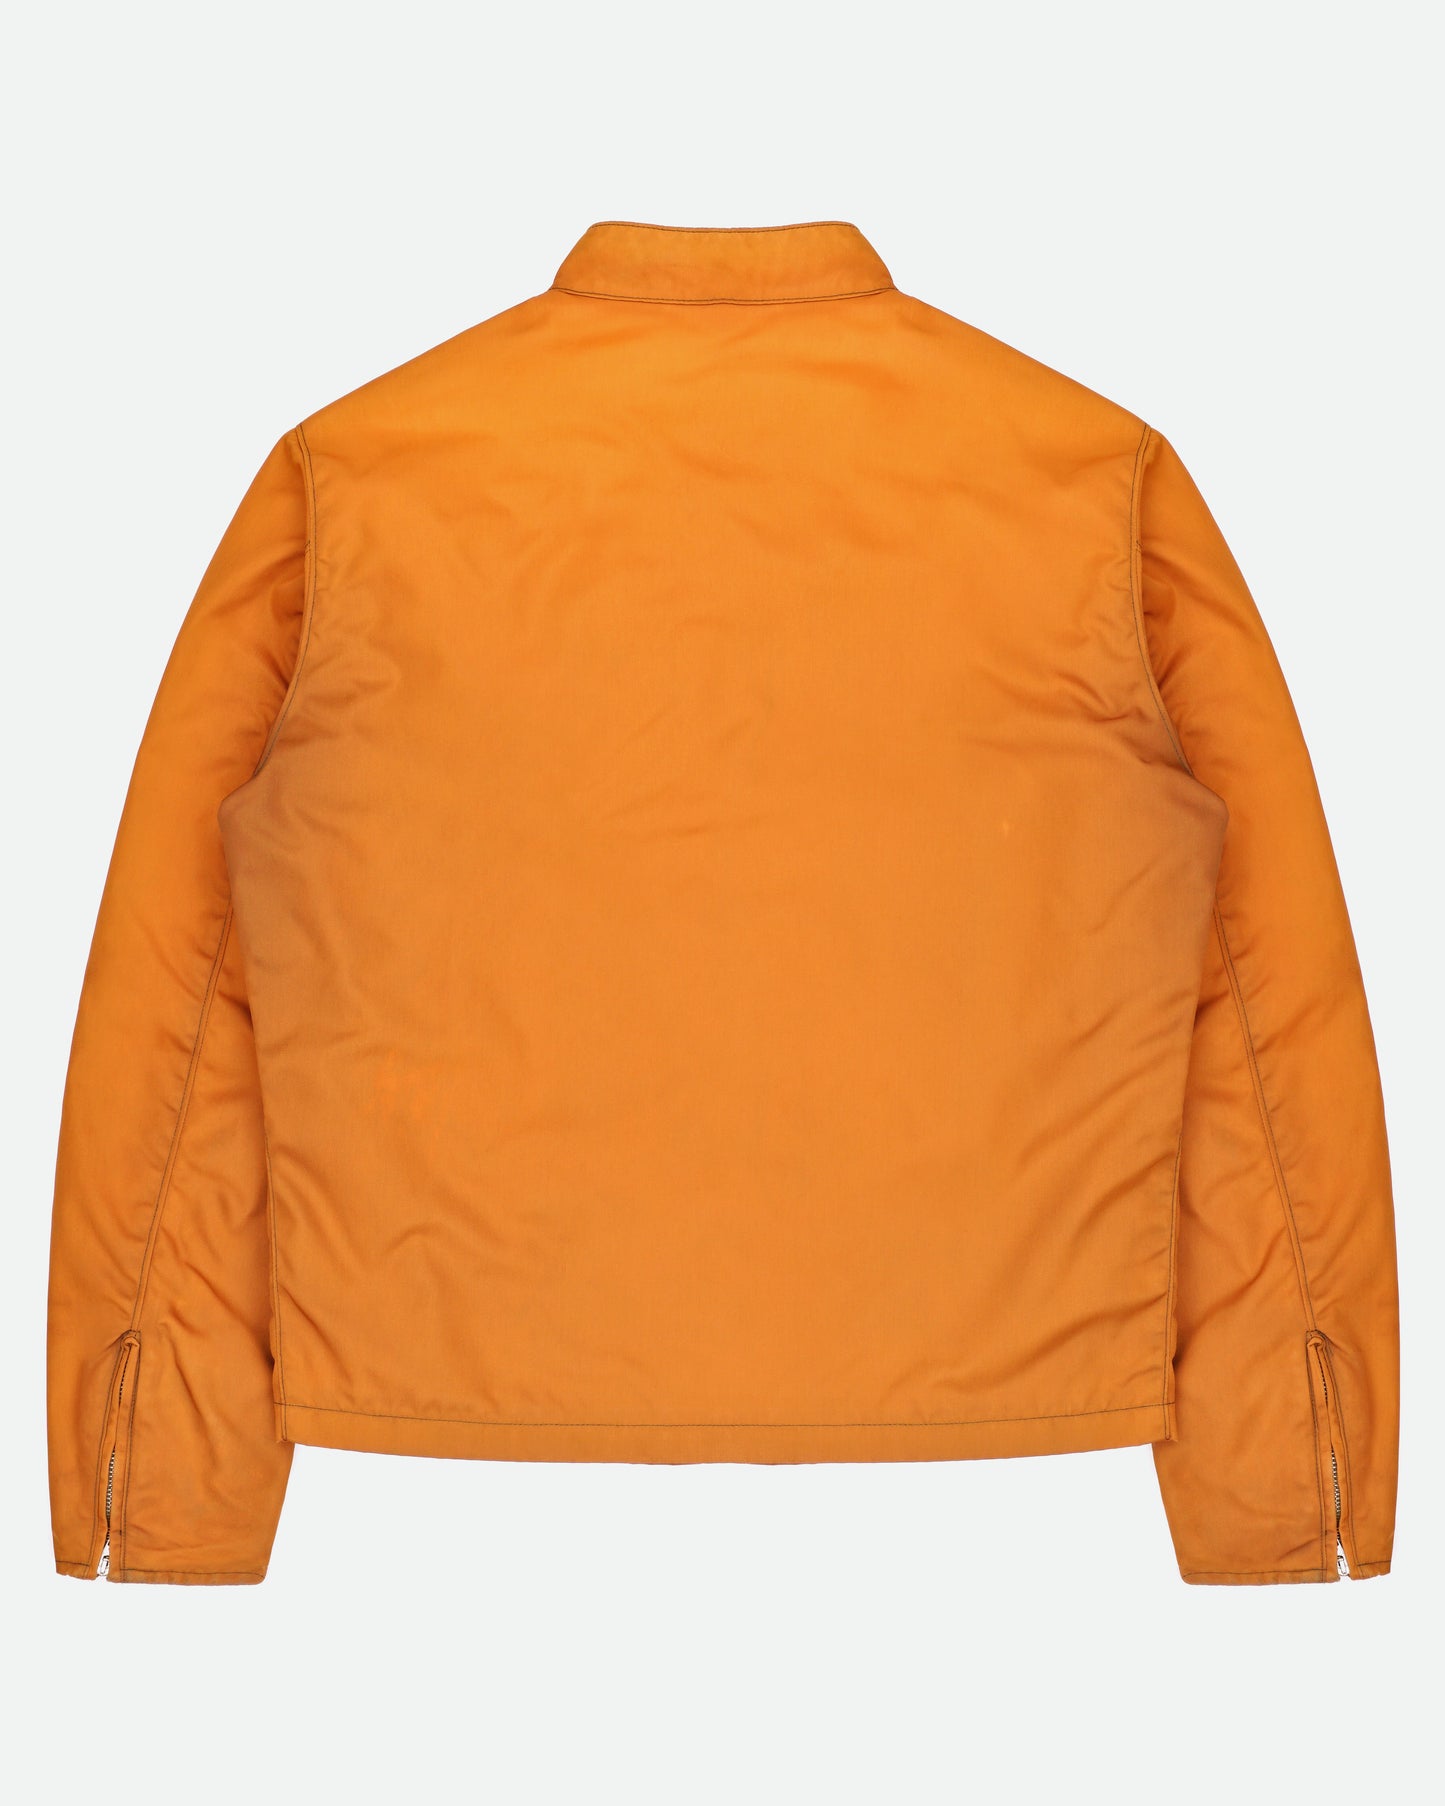 Helmut Lang SS96 Orange MA-1 Moto Jacket